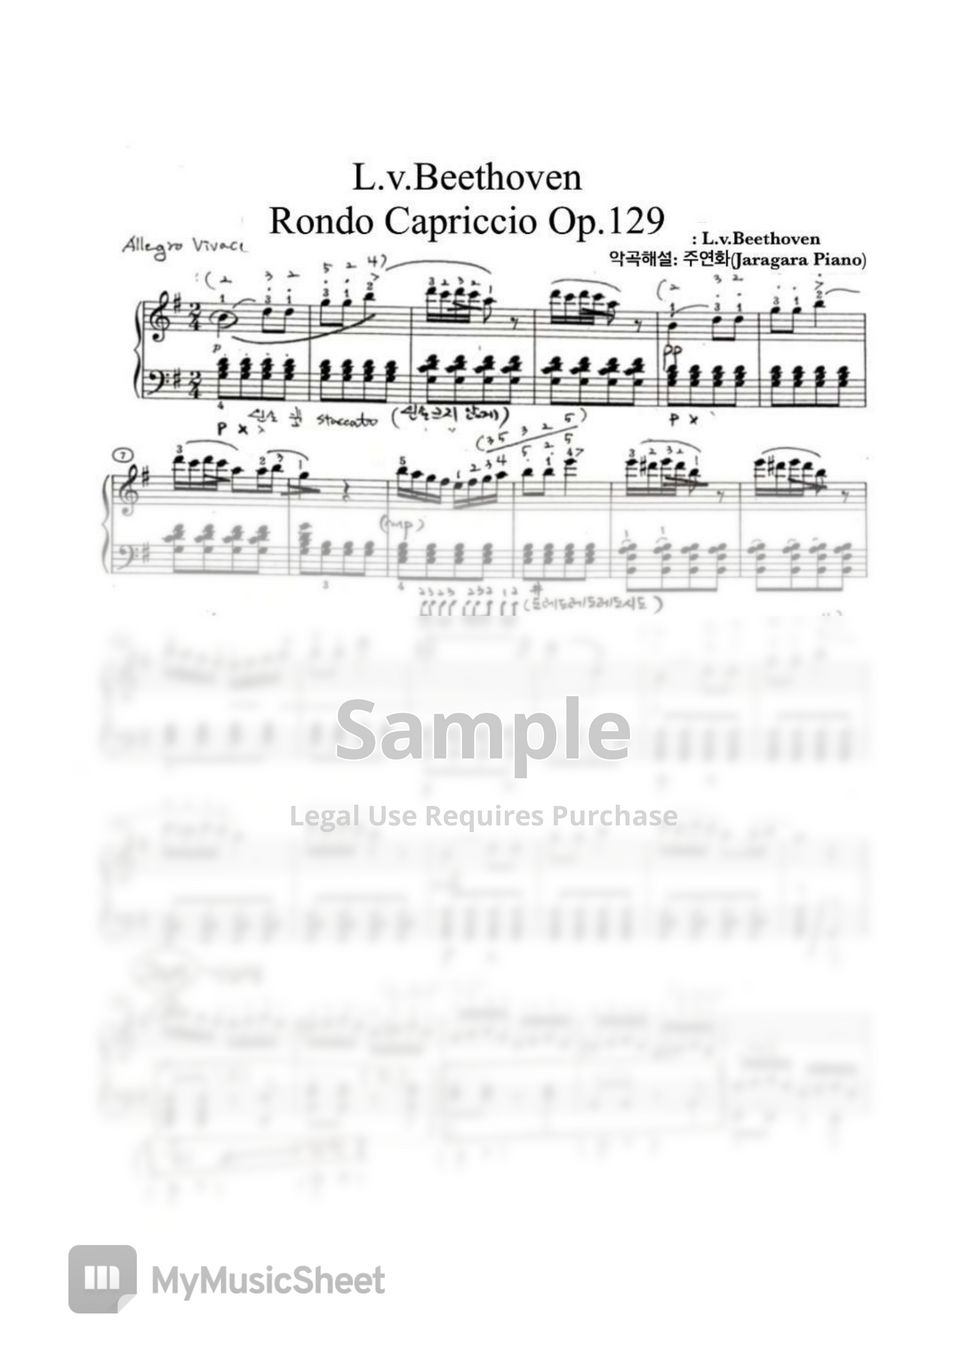 L.V.Beethoven - Rondo a Capriccio Op.129 (잃어버린 동전에 대한 분노) by 곡해설 : 주연화